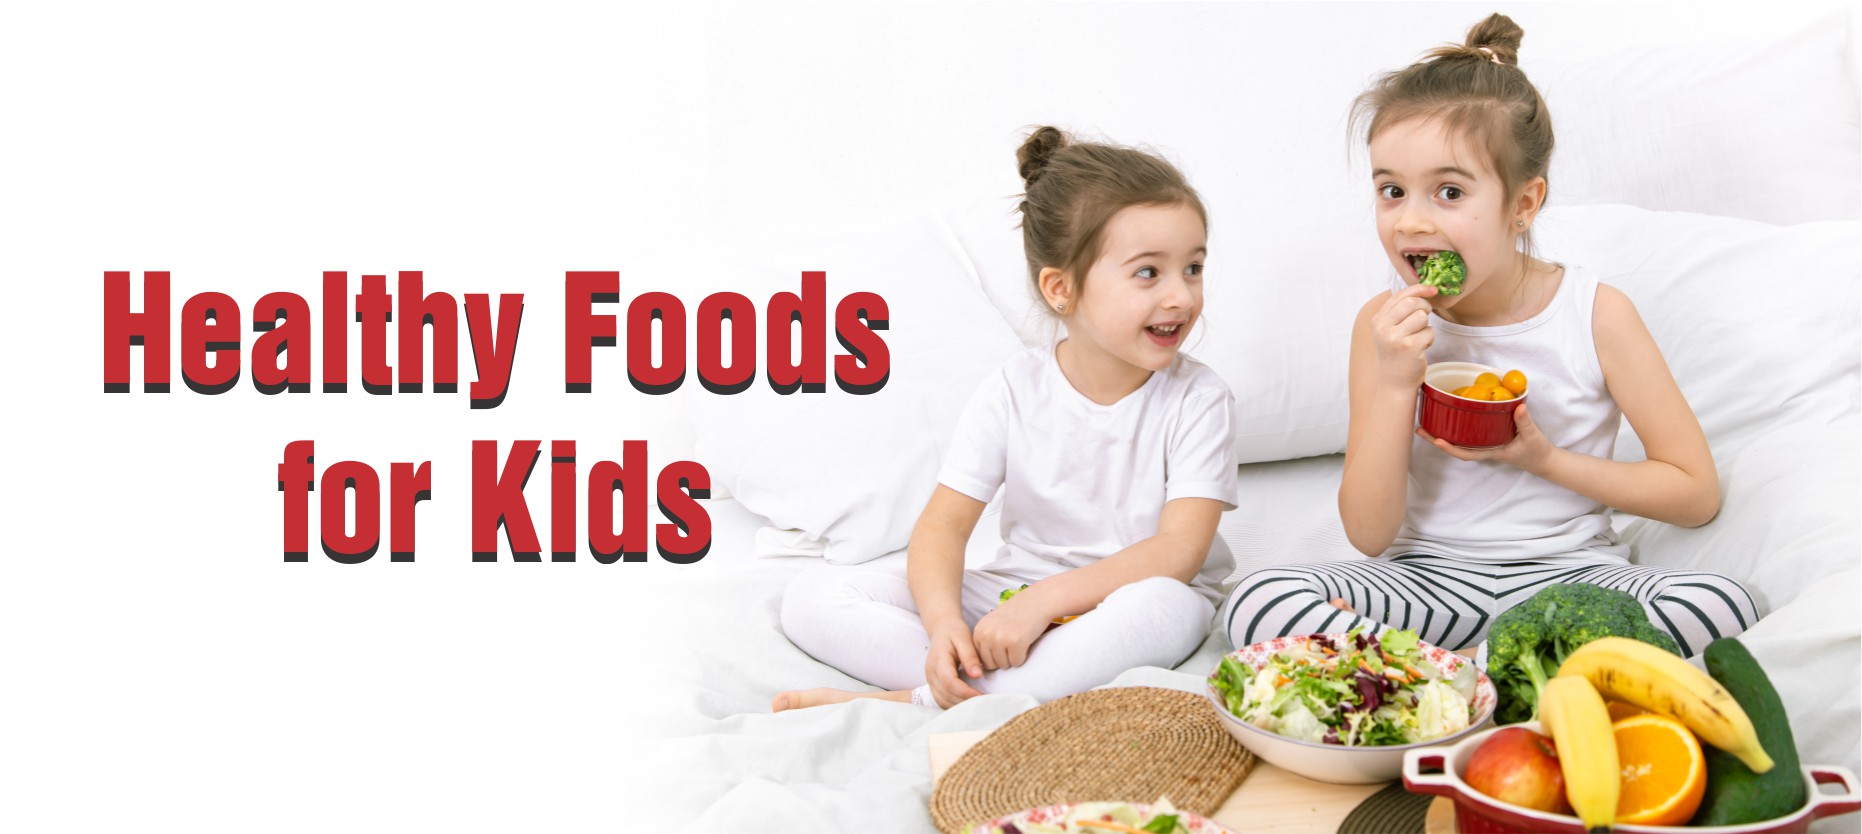 Top Healthy Foods for Kids